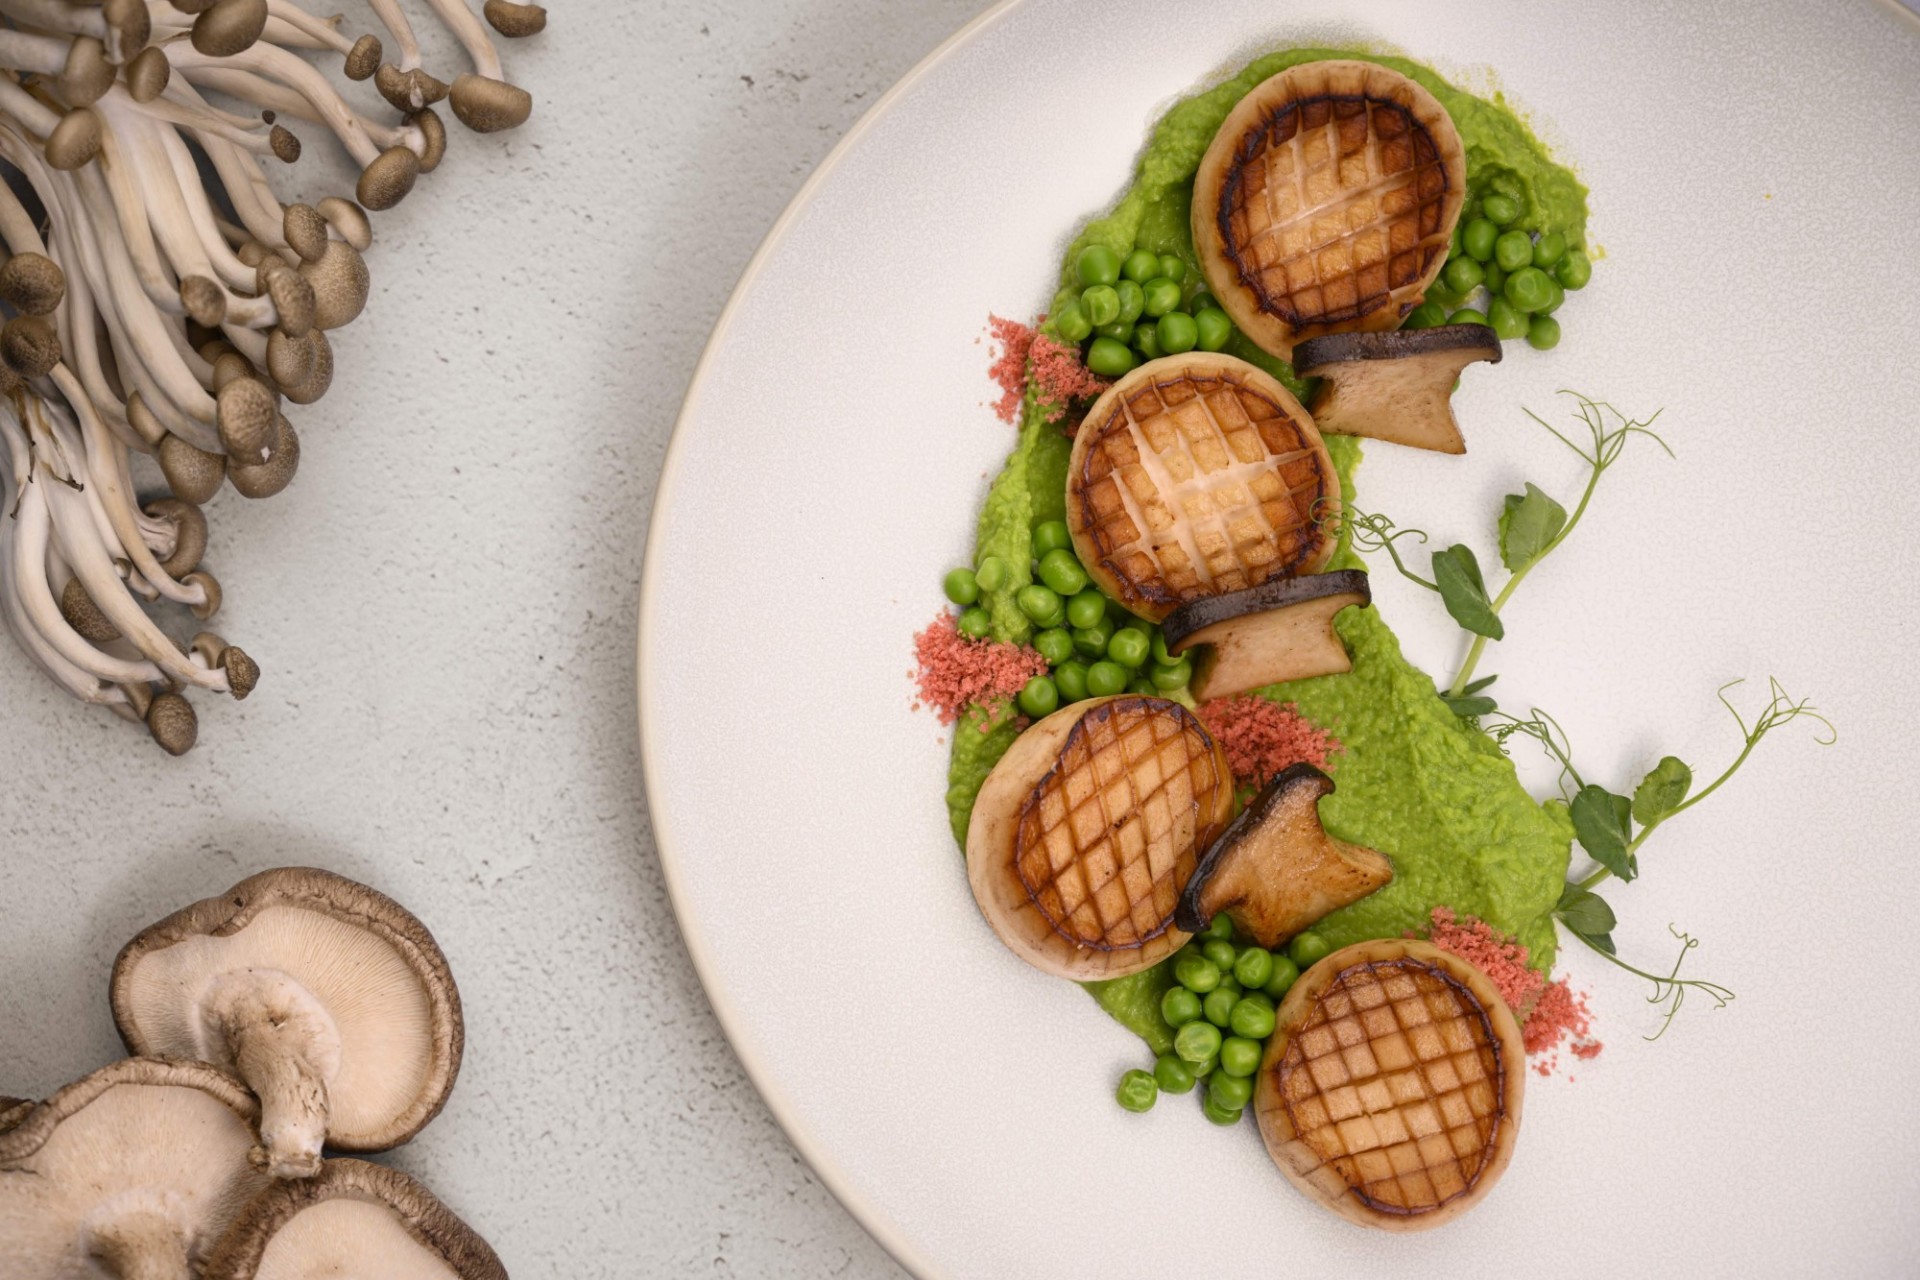 Pan seared scallops with pea puree and mushrooms